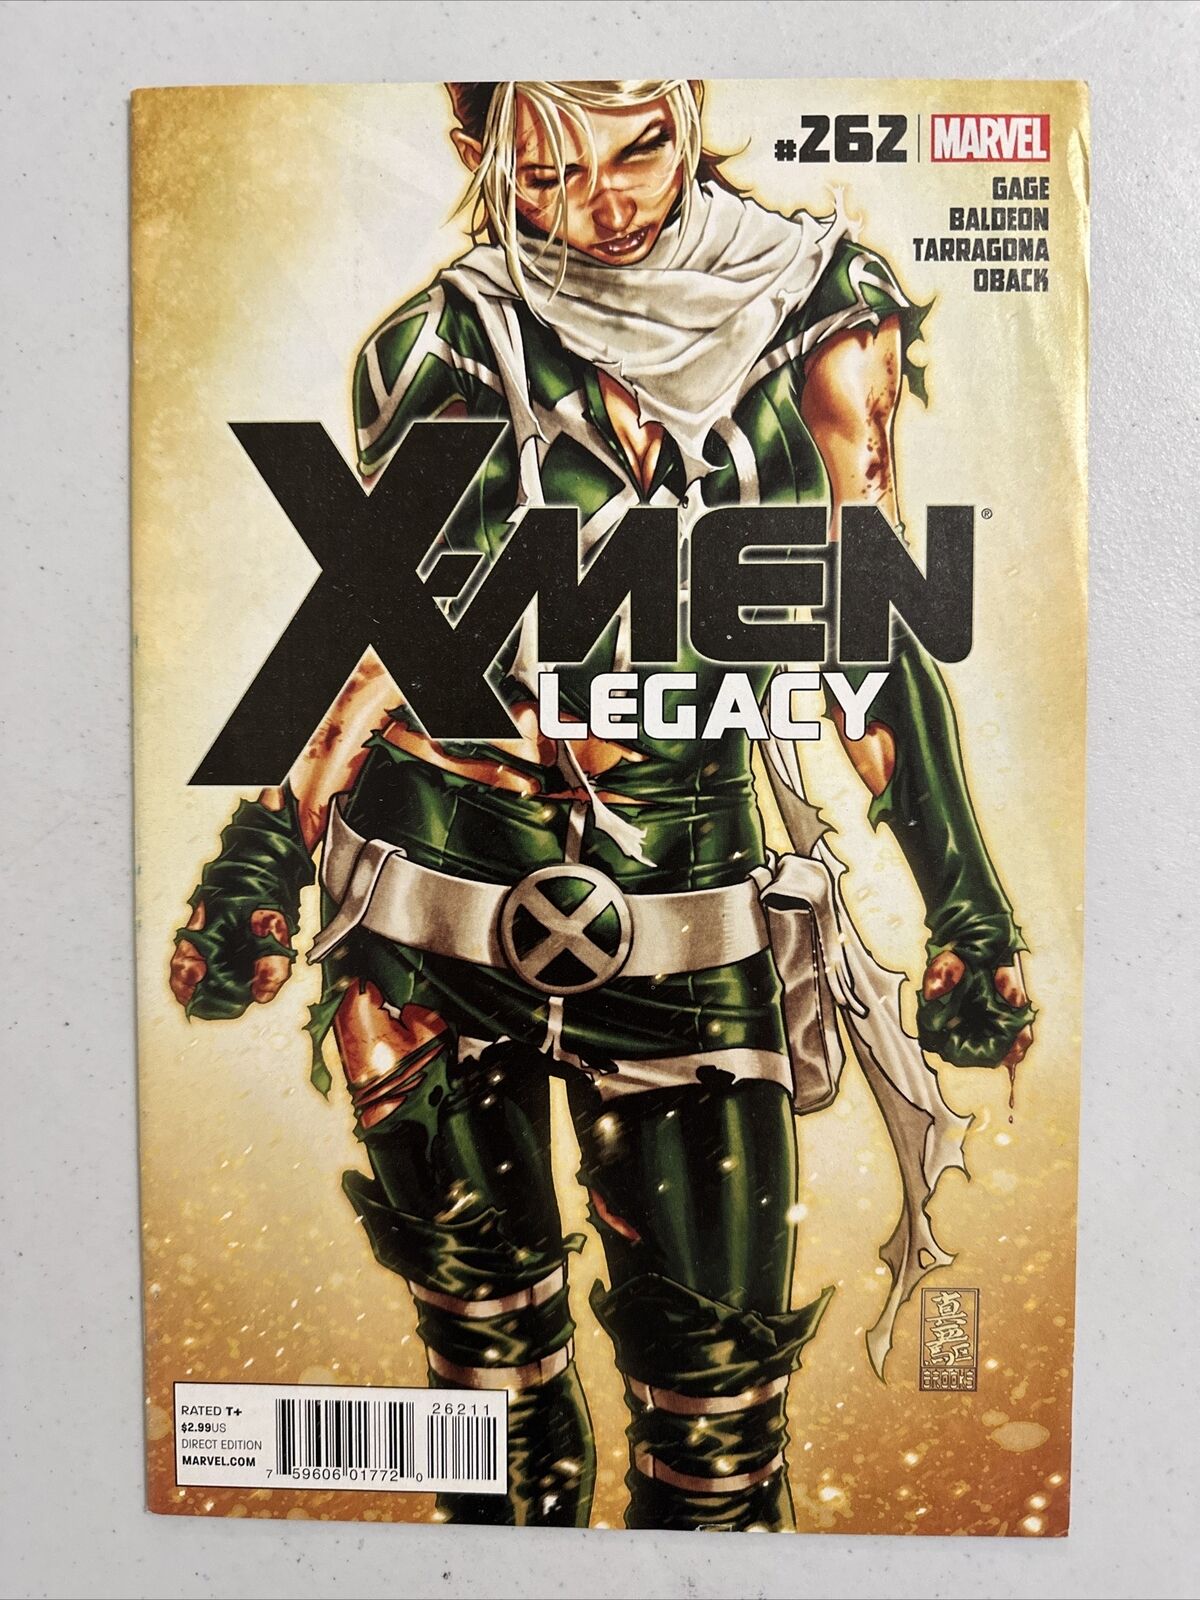 X-Men Legacy #262 Marvel Comics VF COMBINE S&H